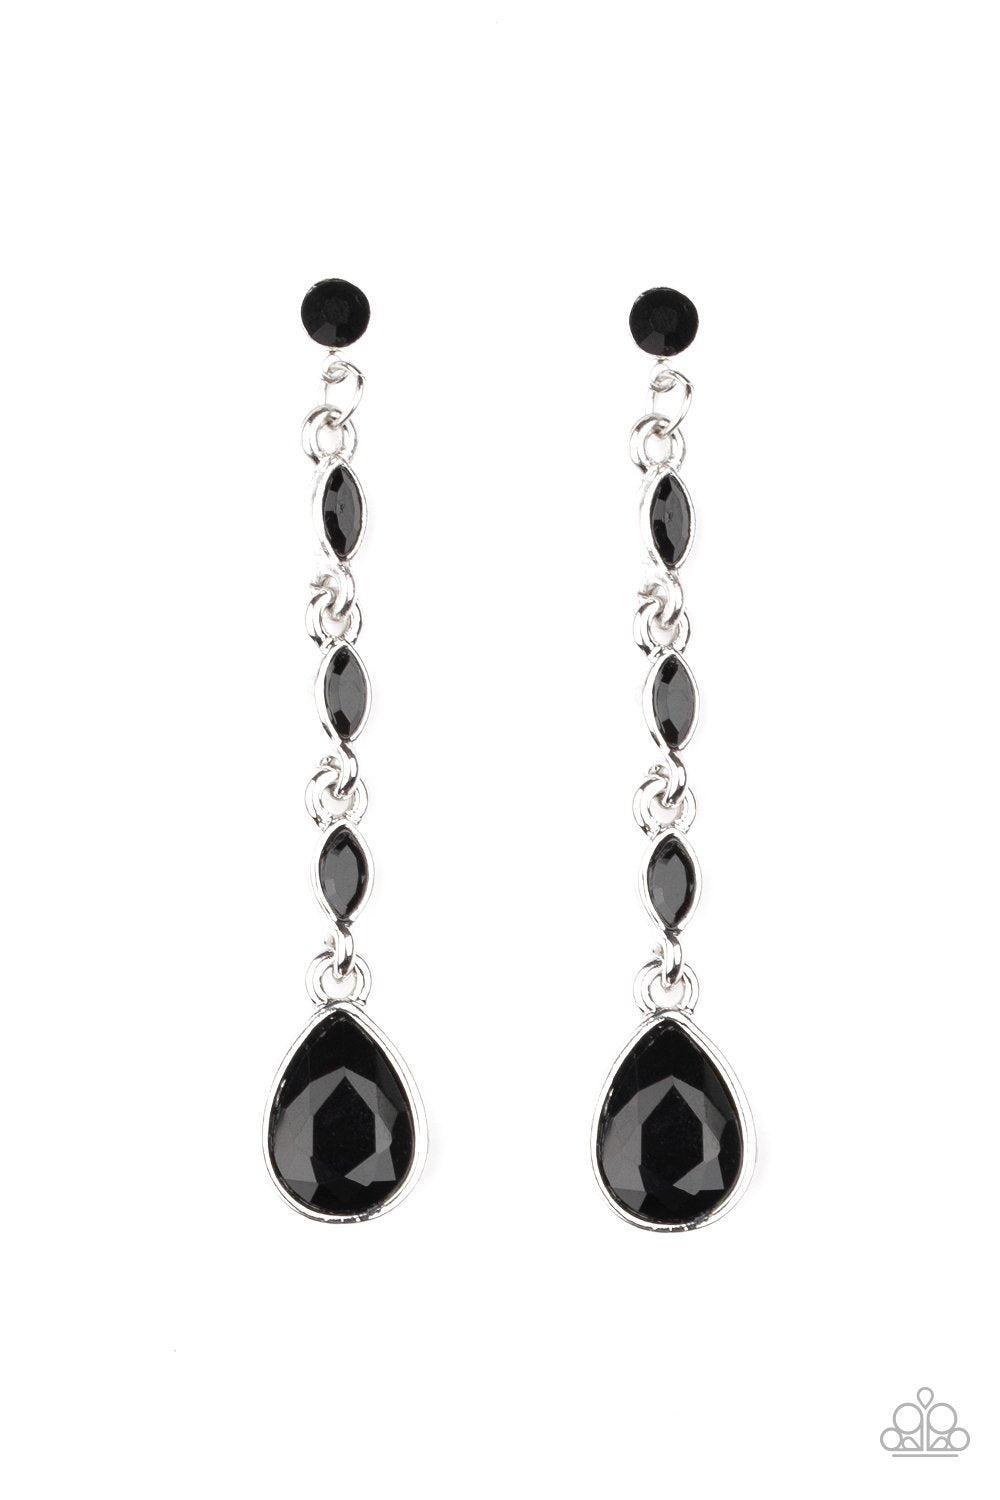 Must Love Diamonds Black Rhinestone Earrings - Paparazzi Accessories-CarasShop.com - $5 Jewelry by Cara Jewels